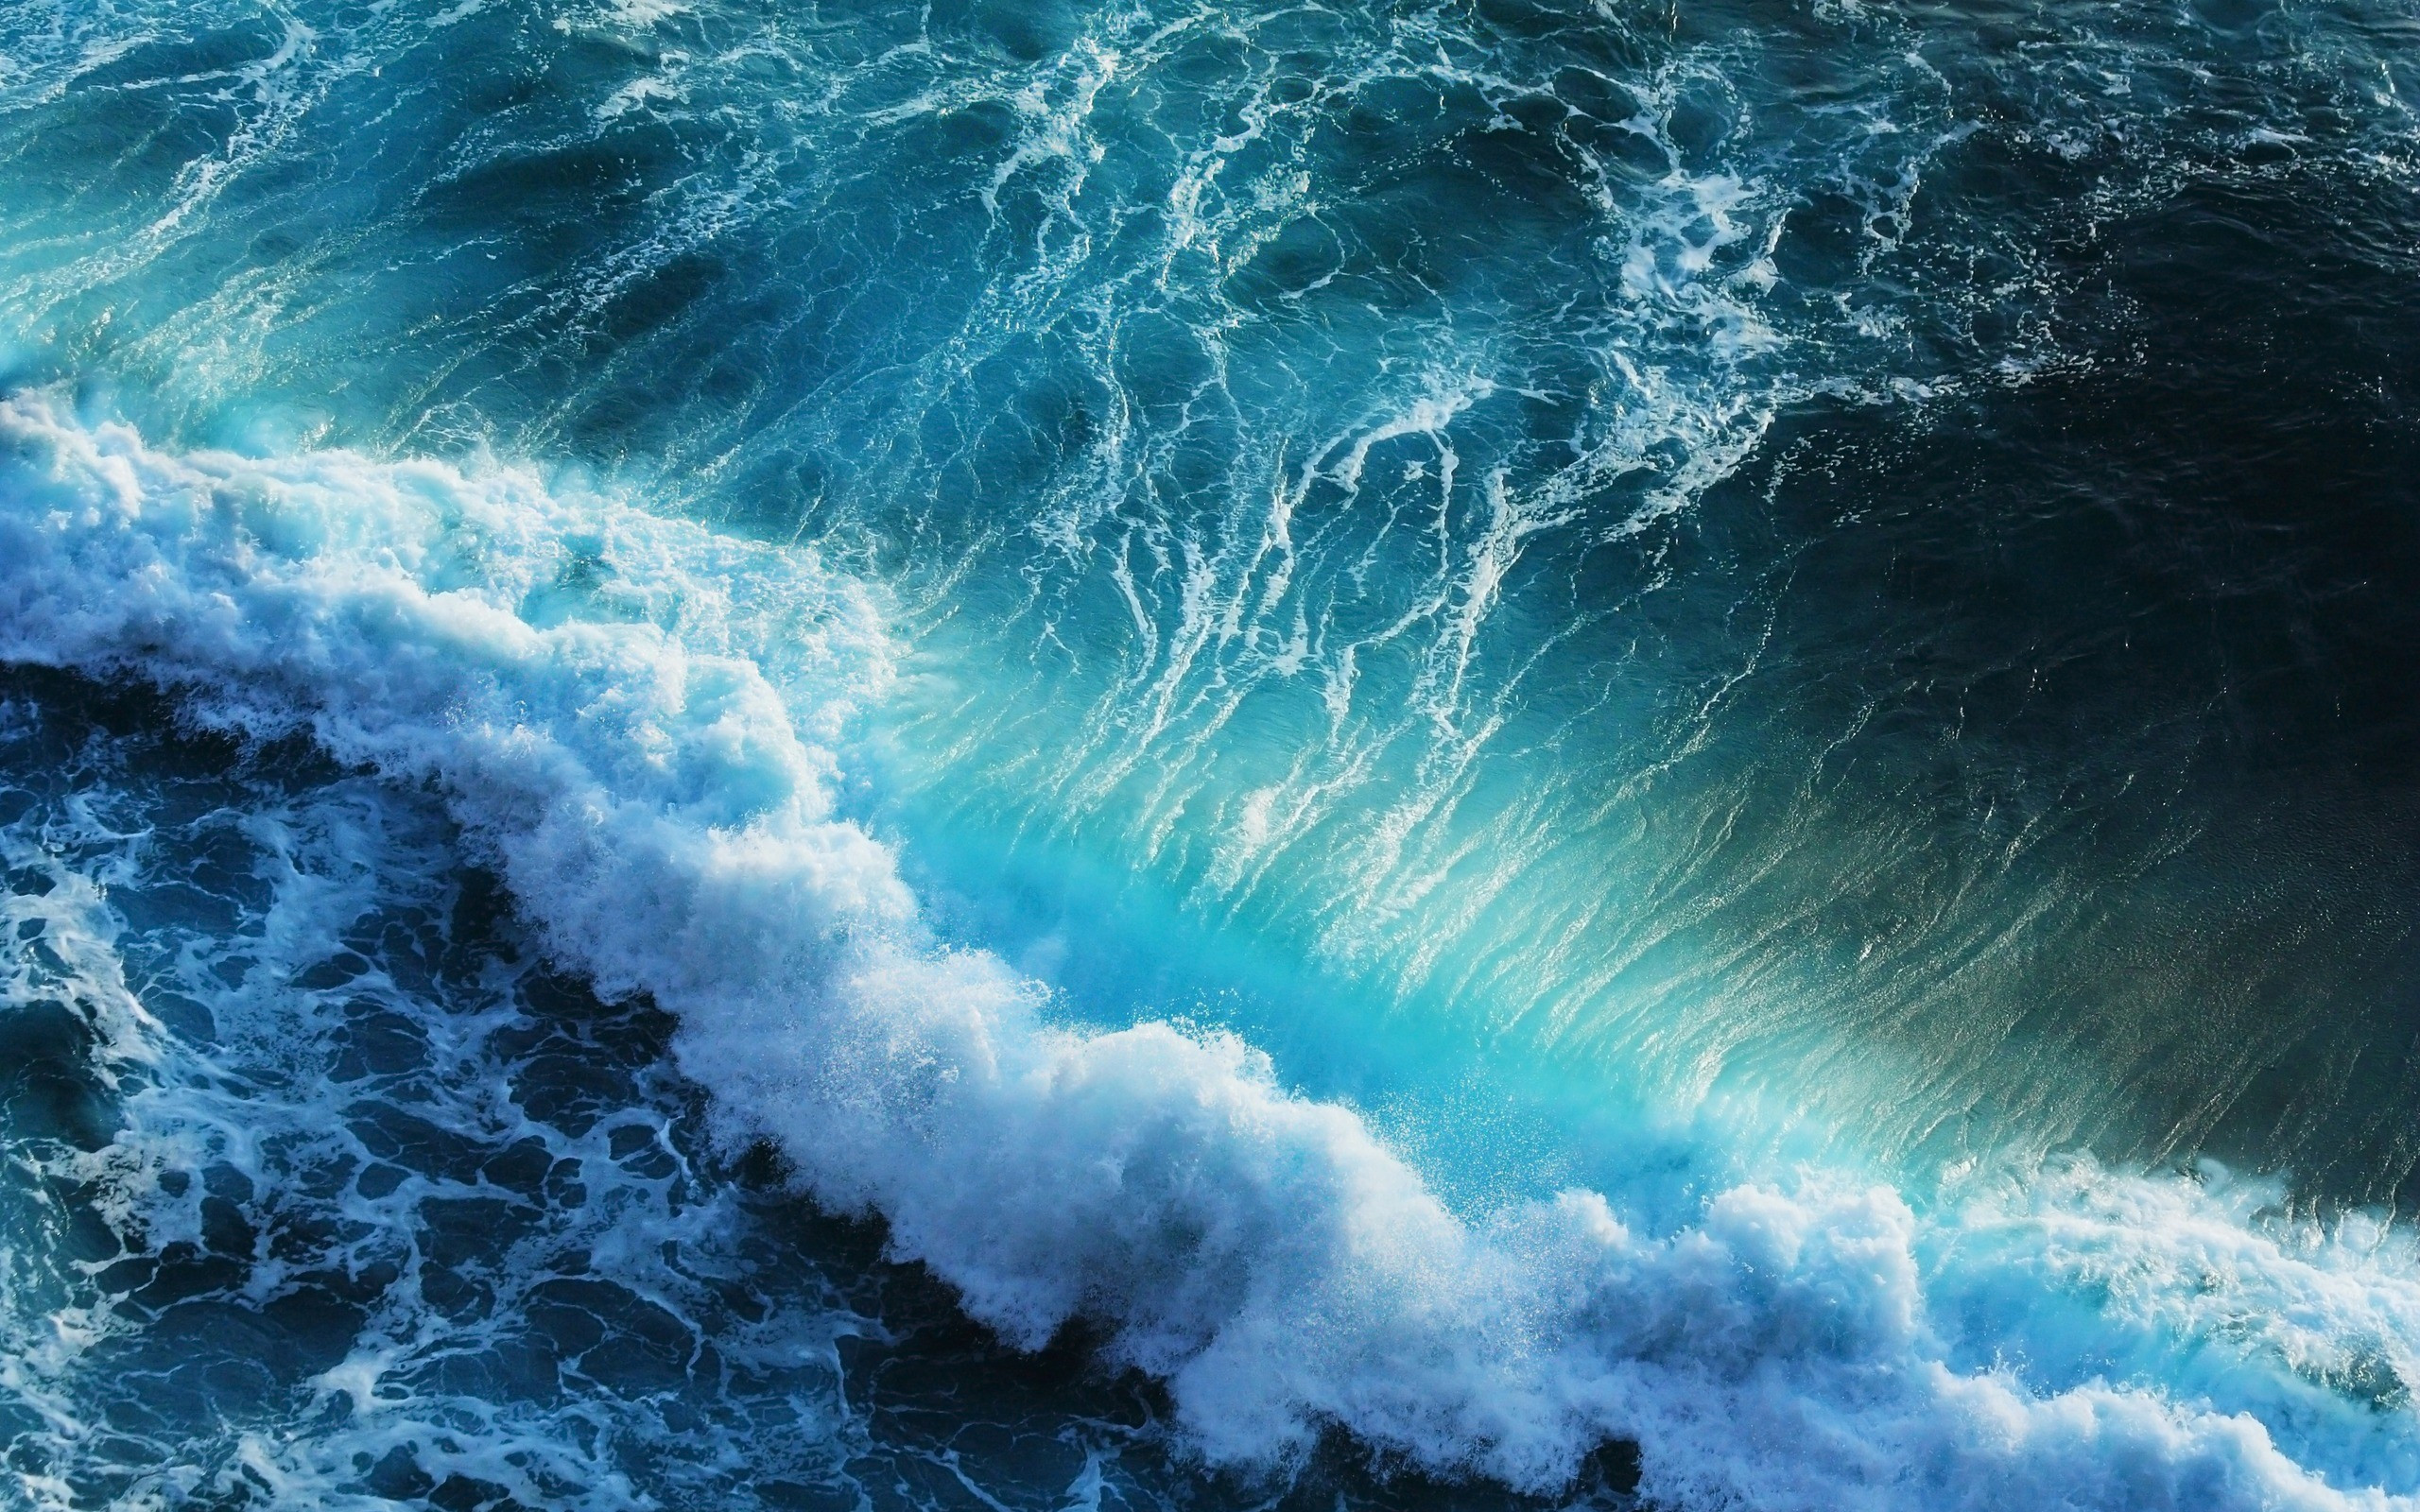 Ocean Waves Wallpaper Hd 2560x1600